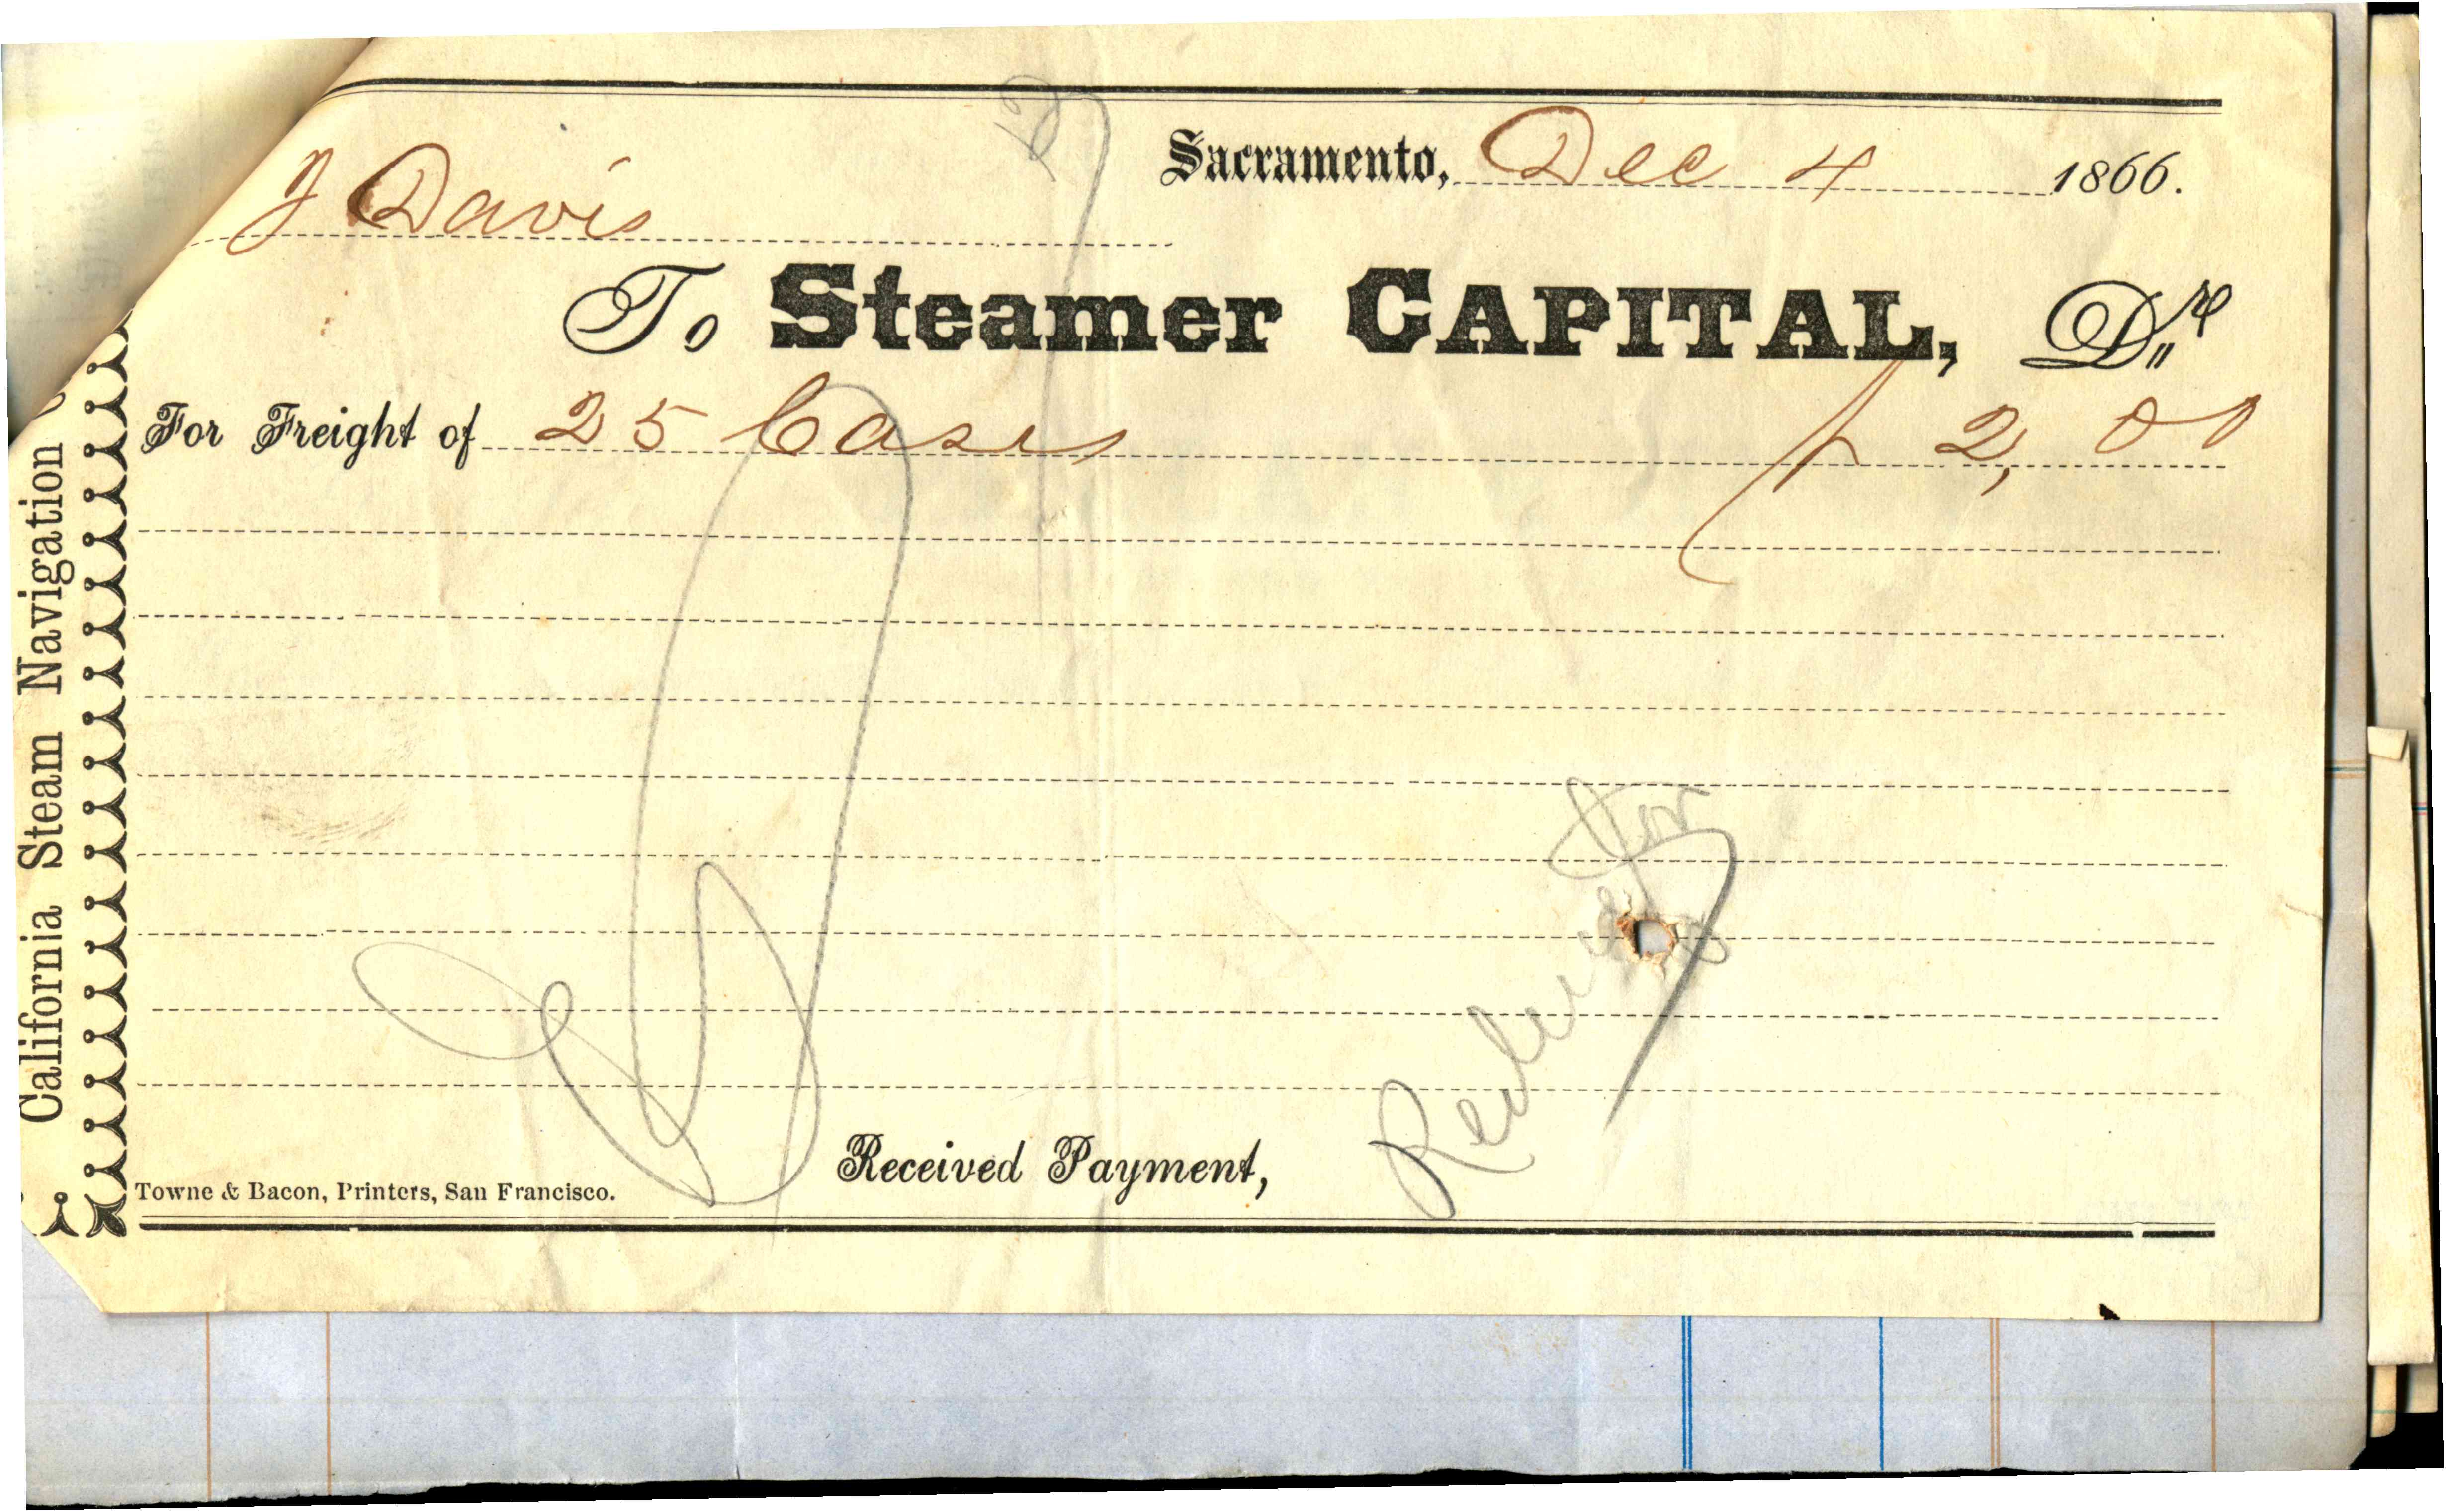 A receipt for Steamer Capital service